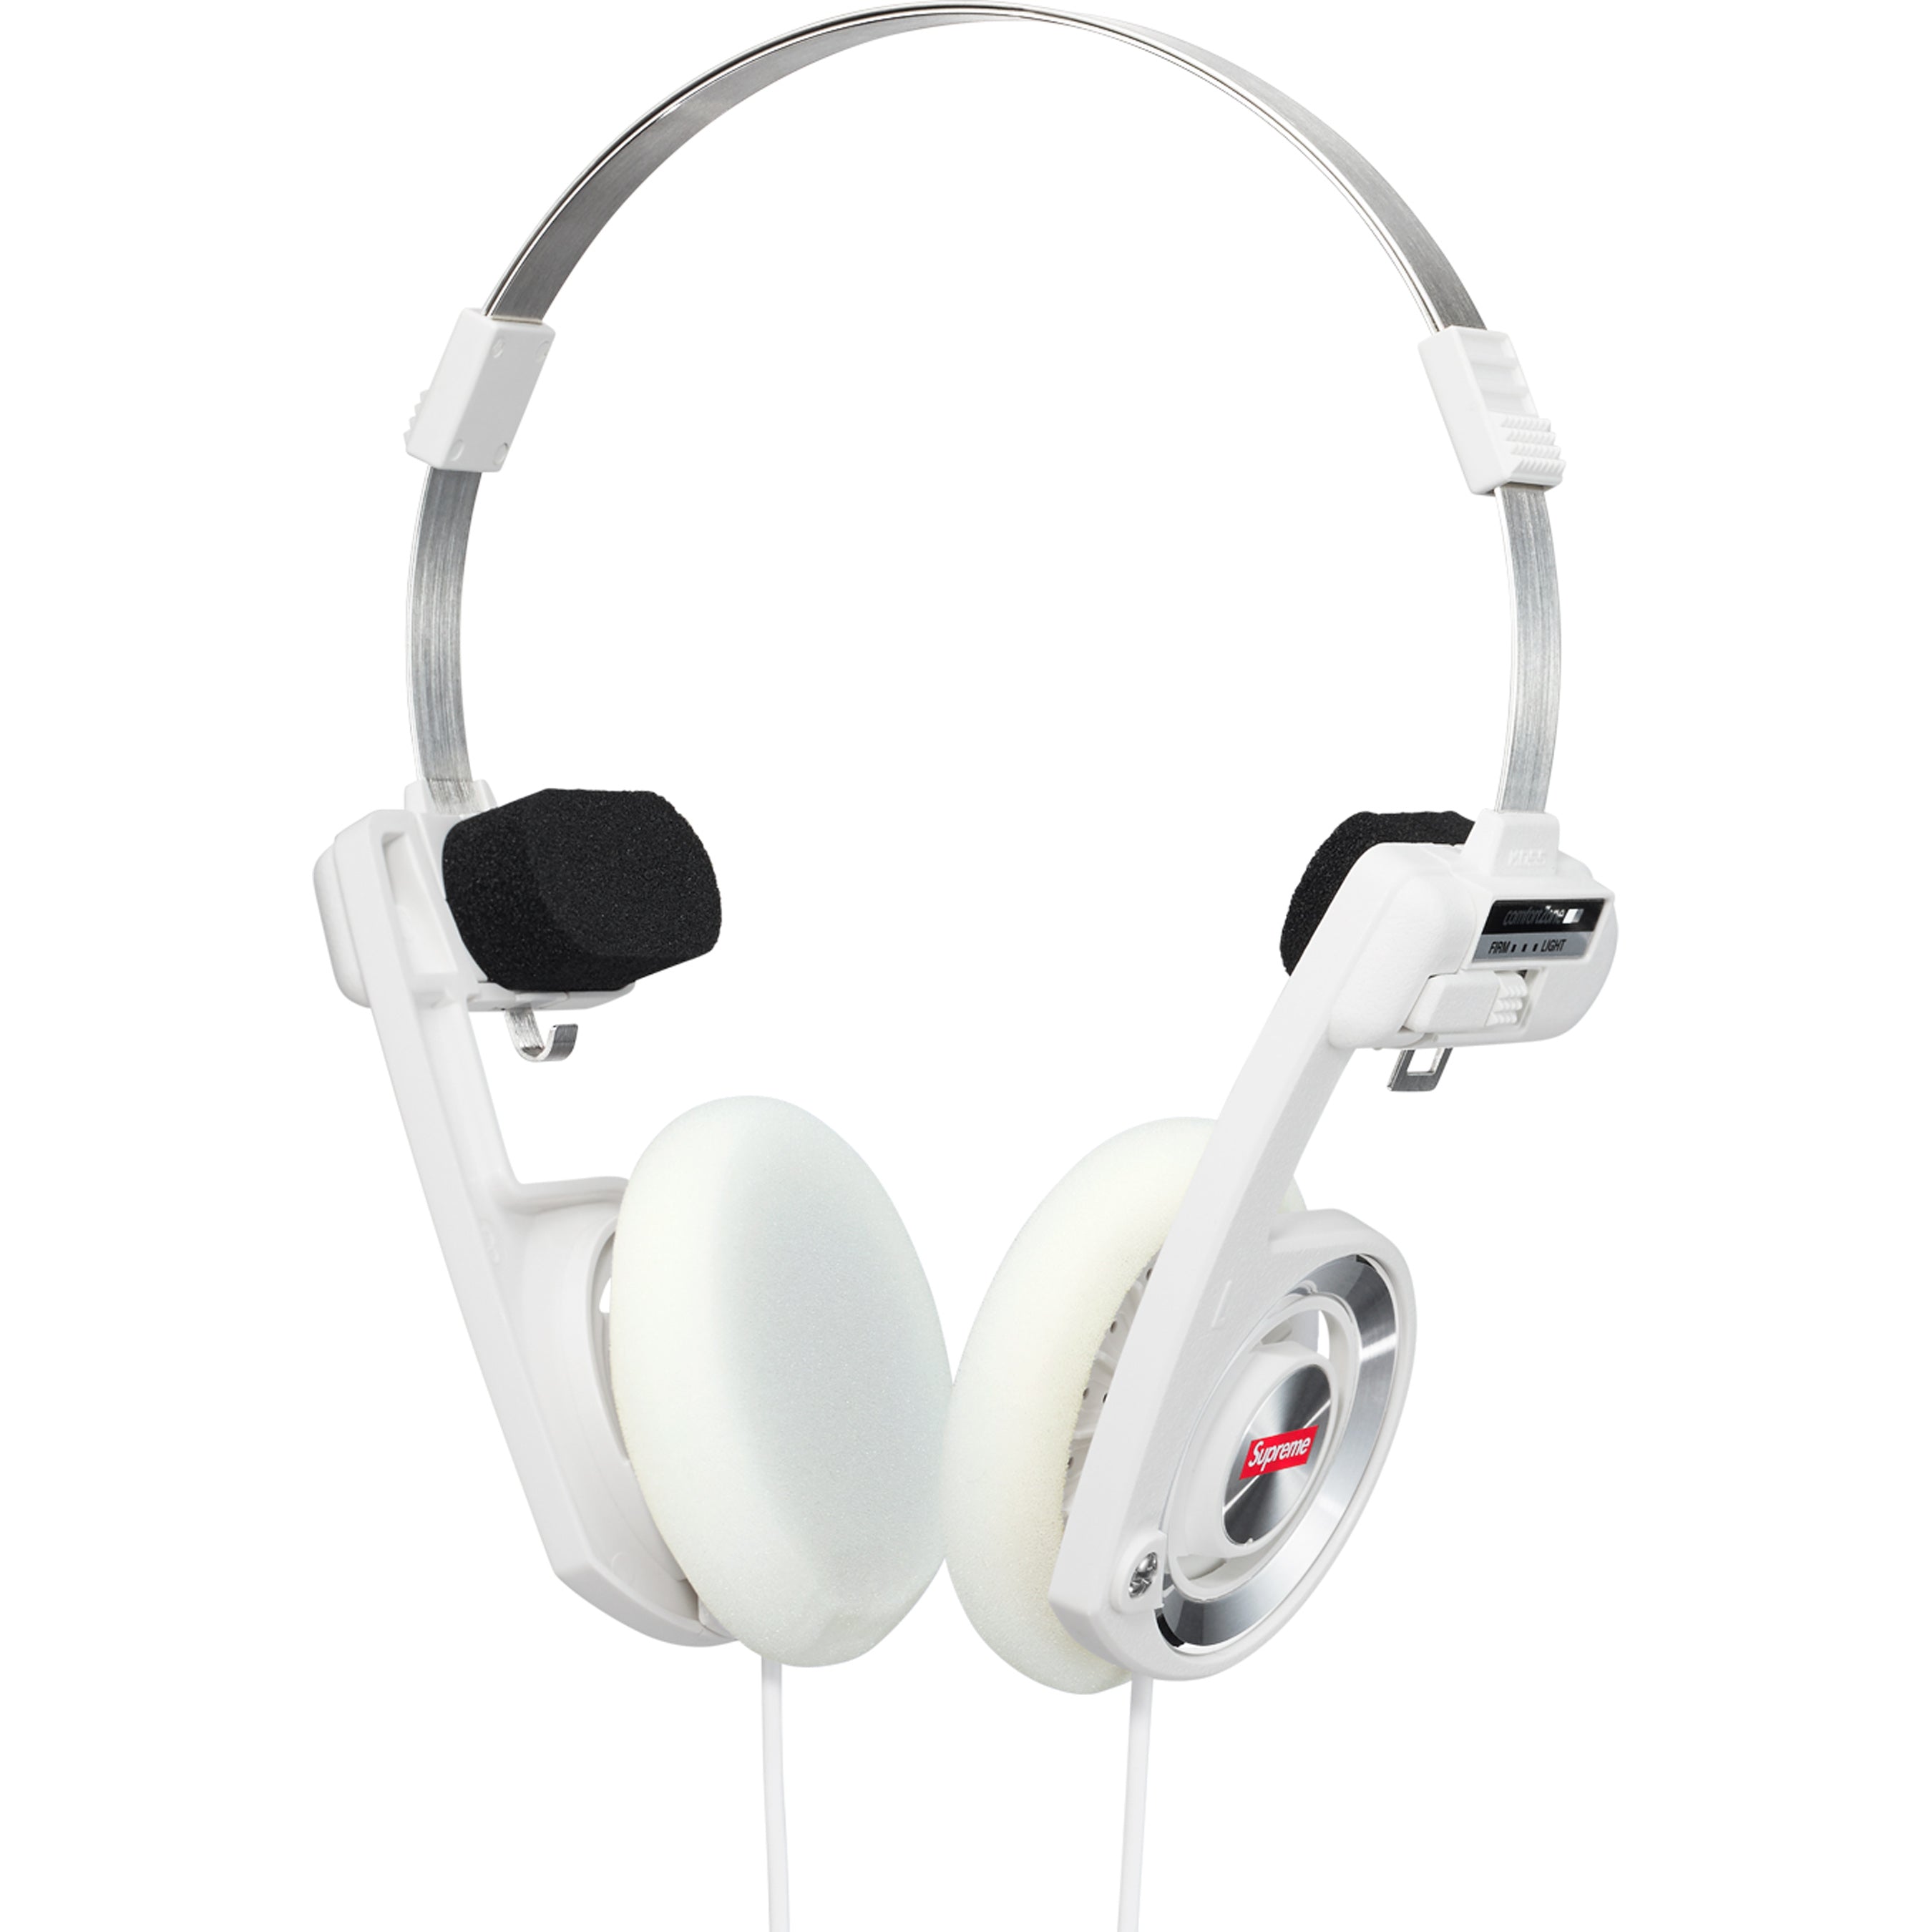 Supreme   Koss Portapro Headphones White